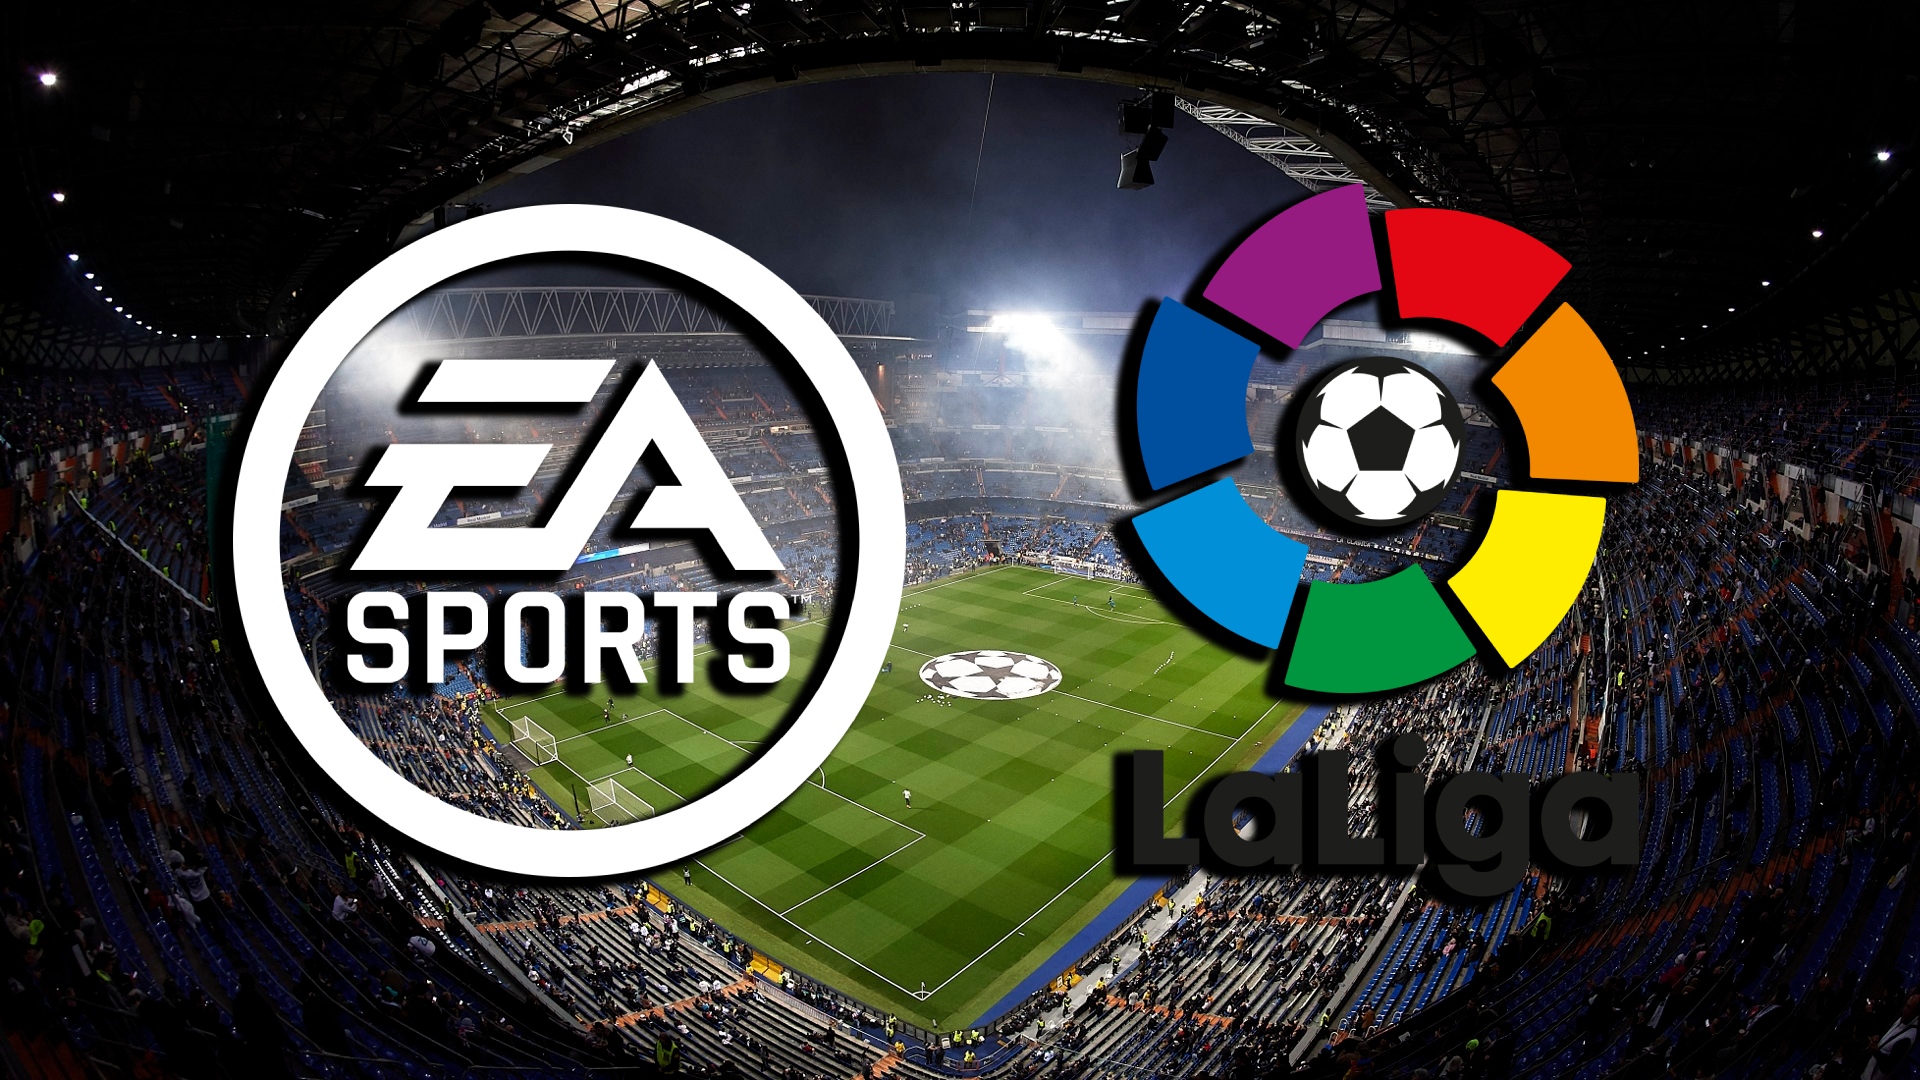 EA Sports patrocina LaLiga